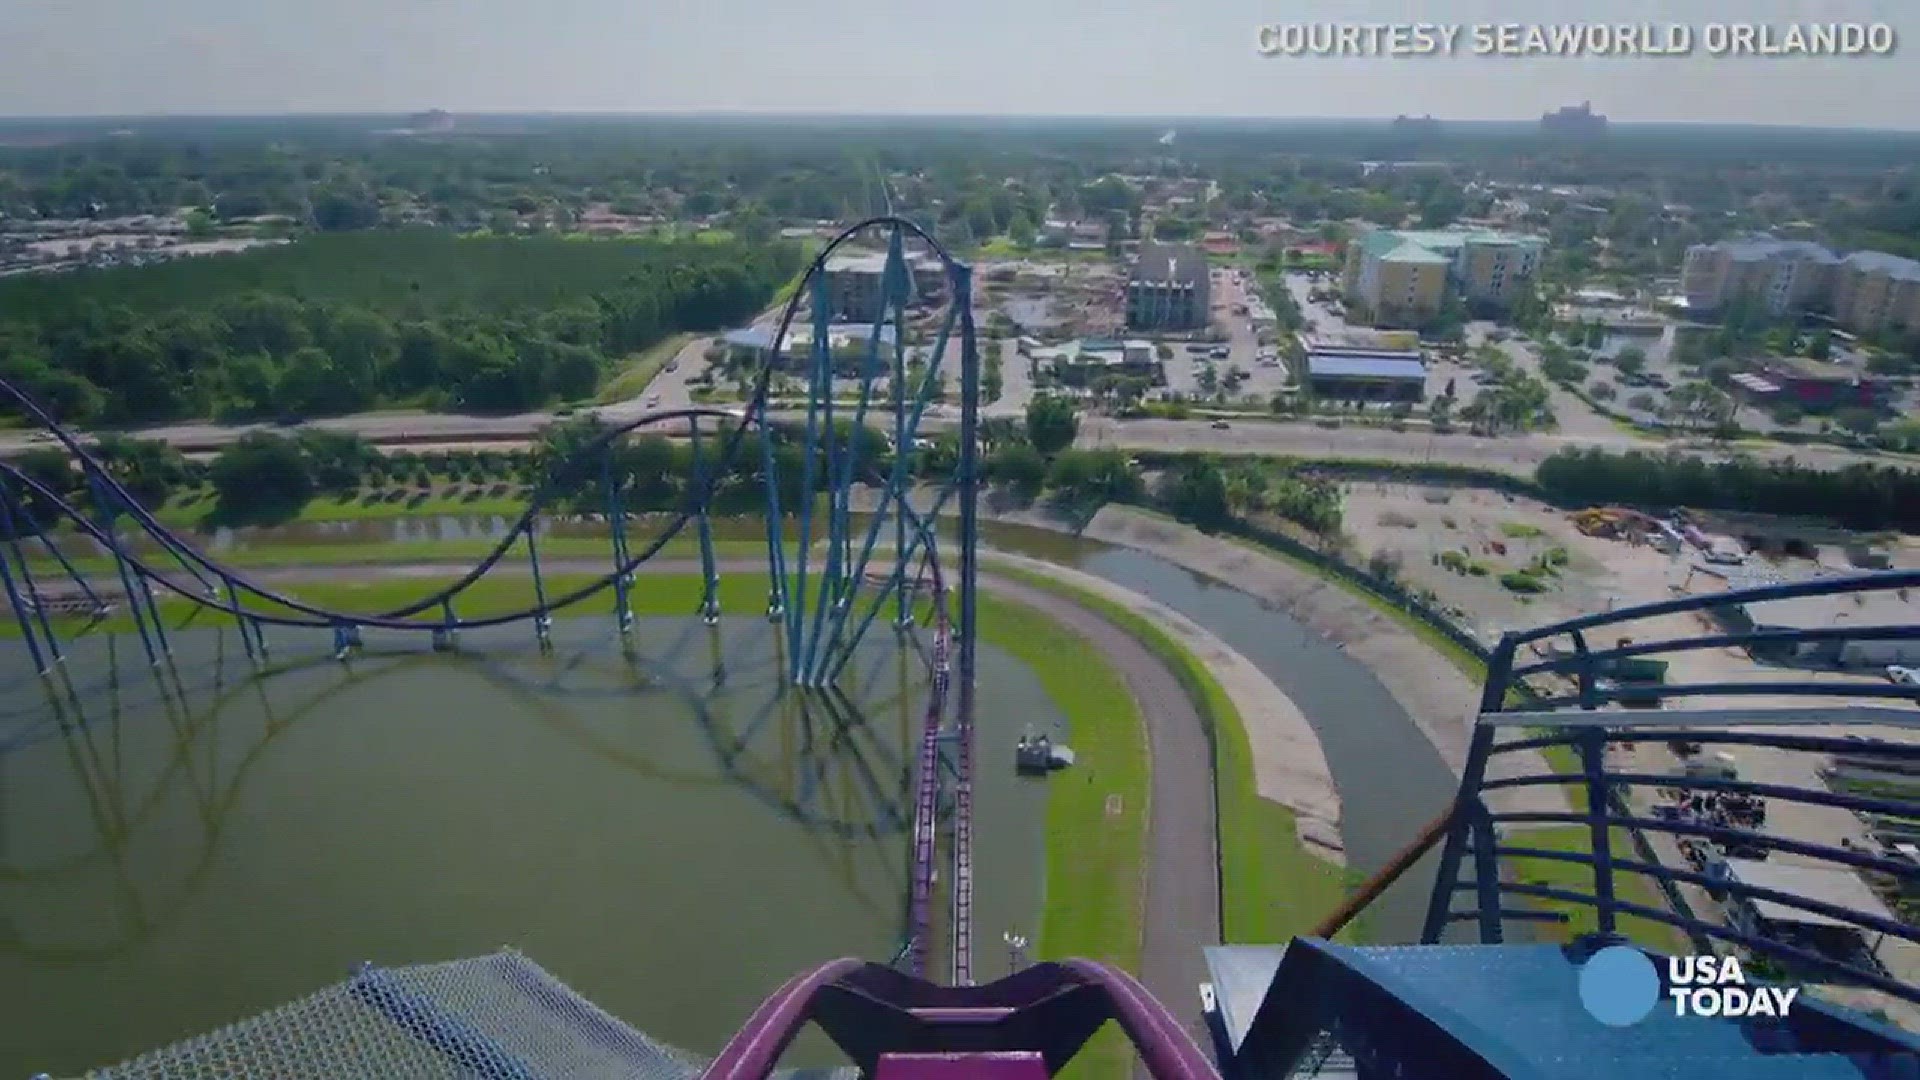 Orlando's Tallest Roller Coaster - SeaWorld's Mako